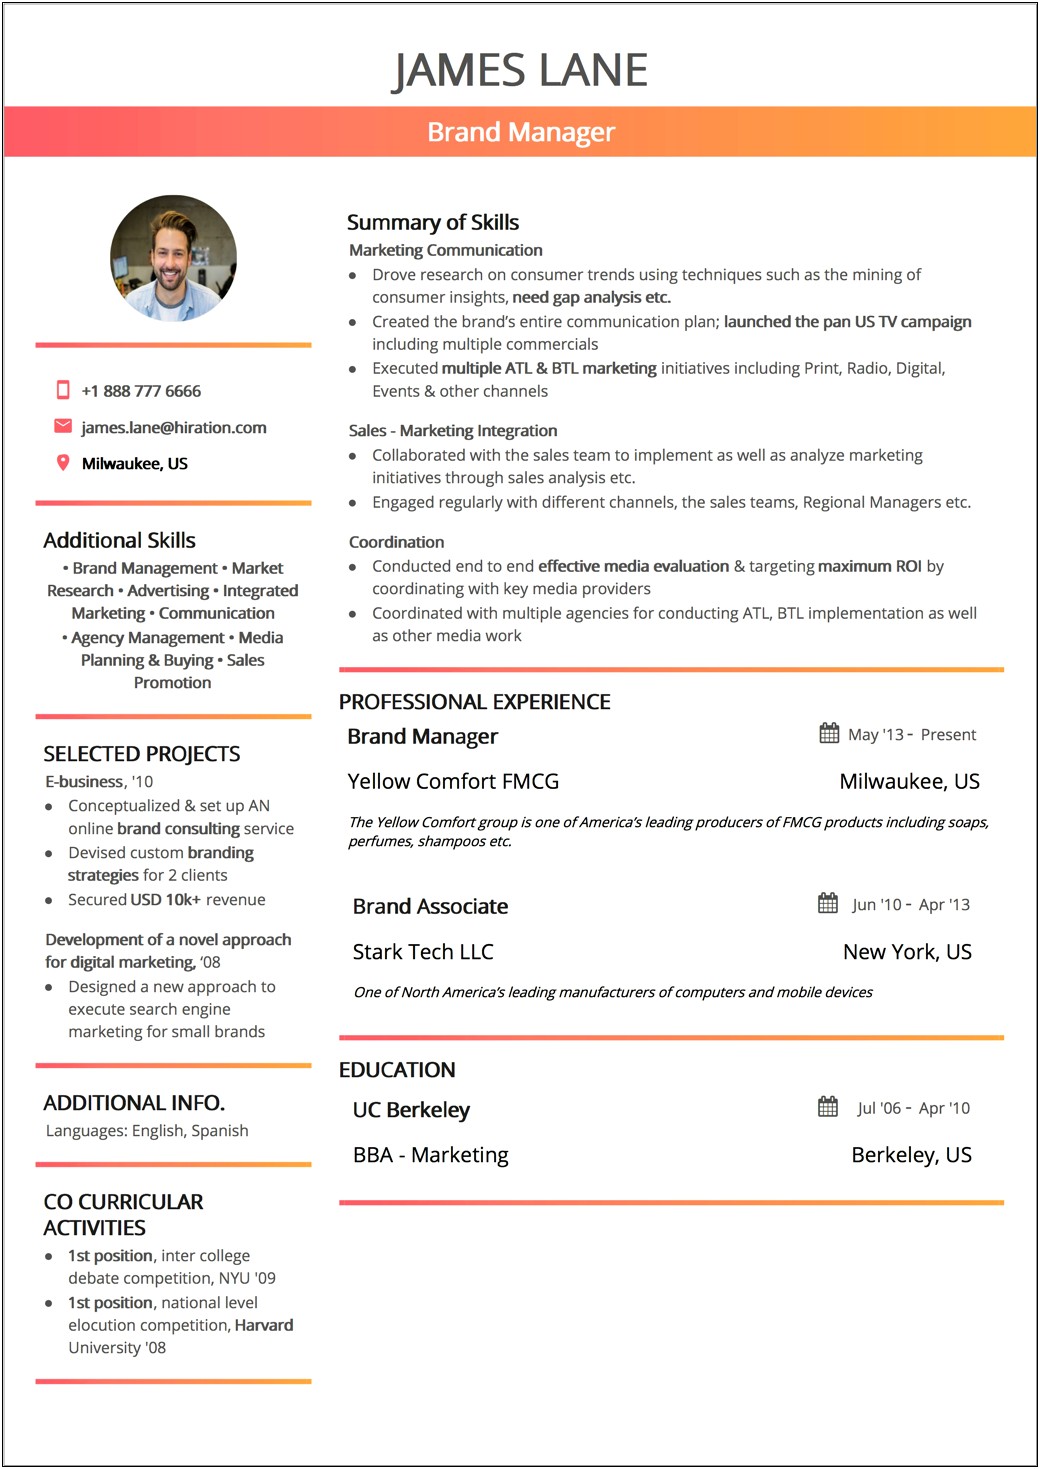 Harvard Buisness Best Resume For Jobs